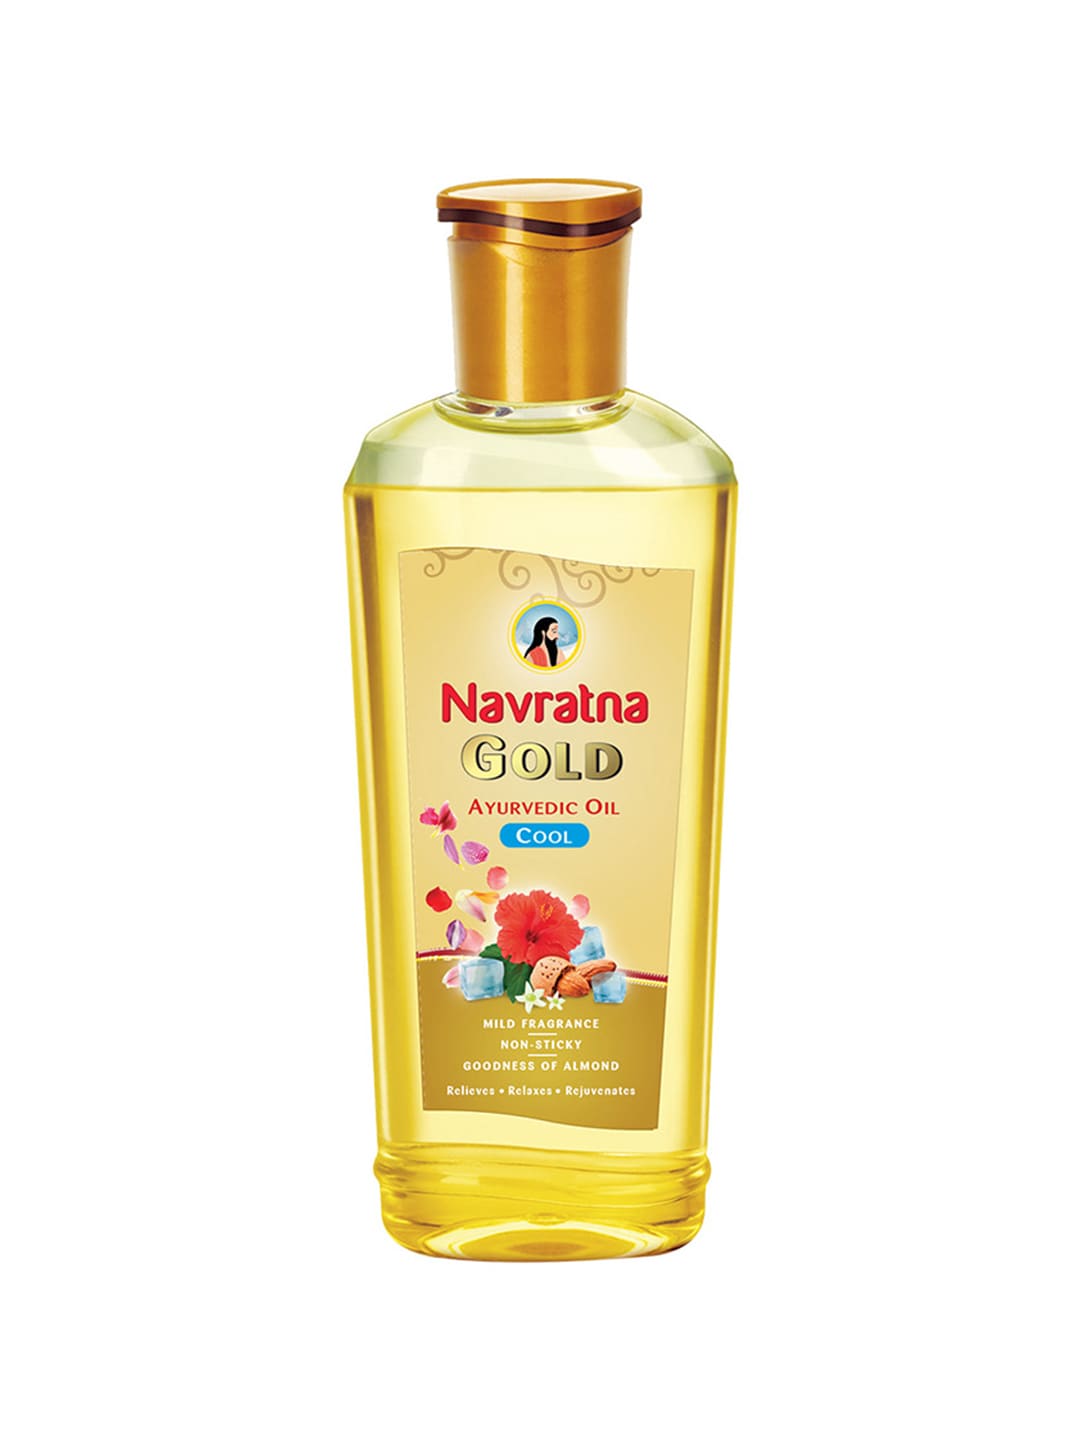 Navratna Gold Ayurvedic Oil with Almond 300 ml Price in India